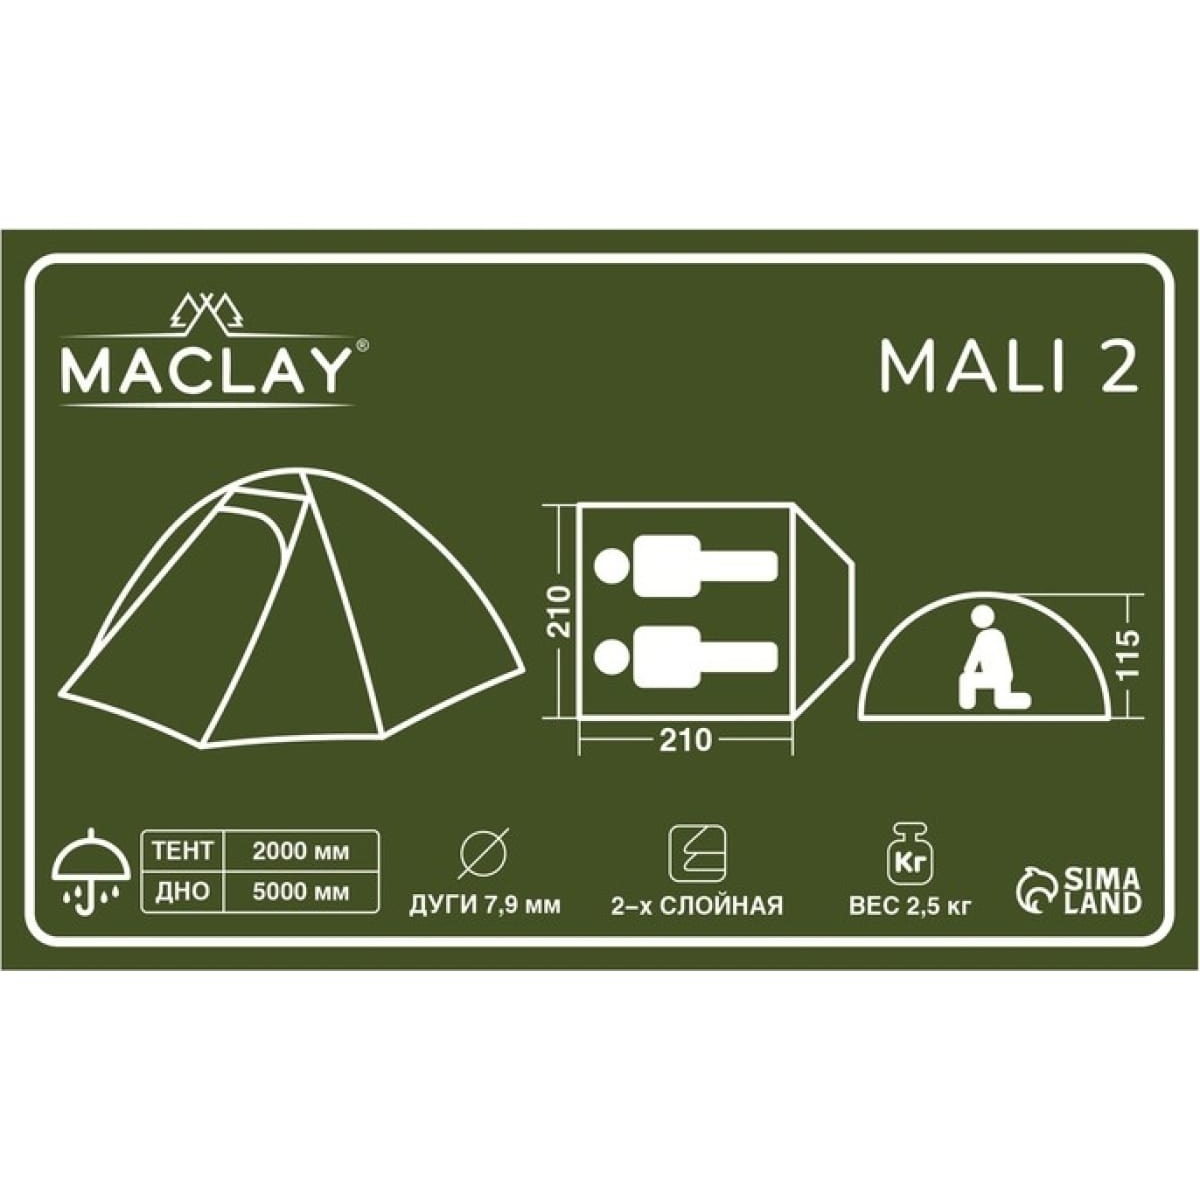 Палатка Maclay Mali треккинговая 2 места 210х210х115 см, цвет зелёный - фото 6